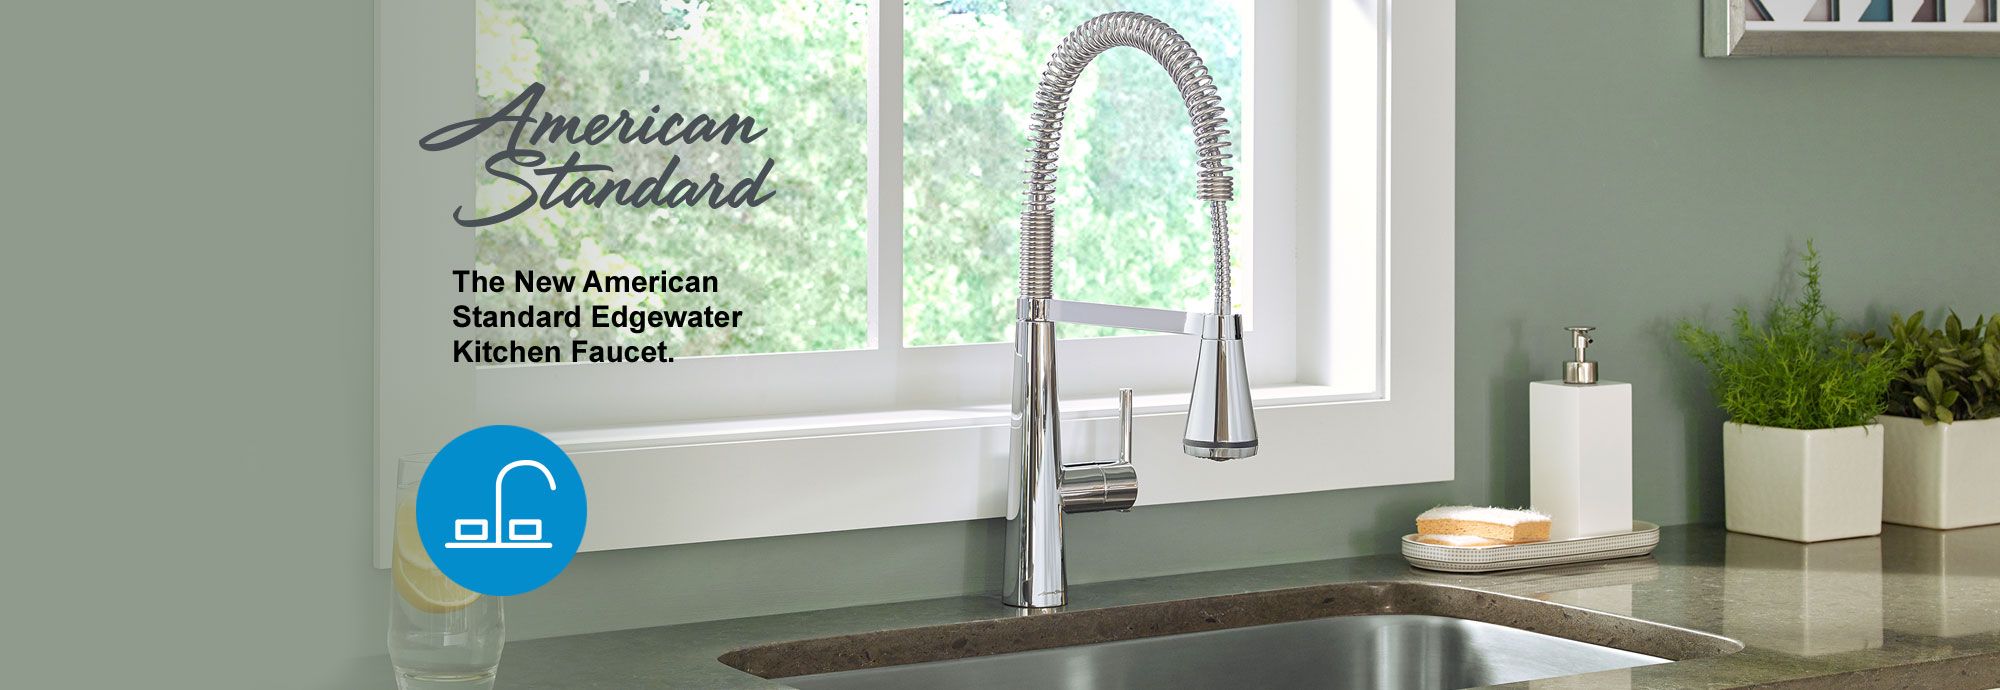 American Standard Edgewater Kitchen Faucet